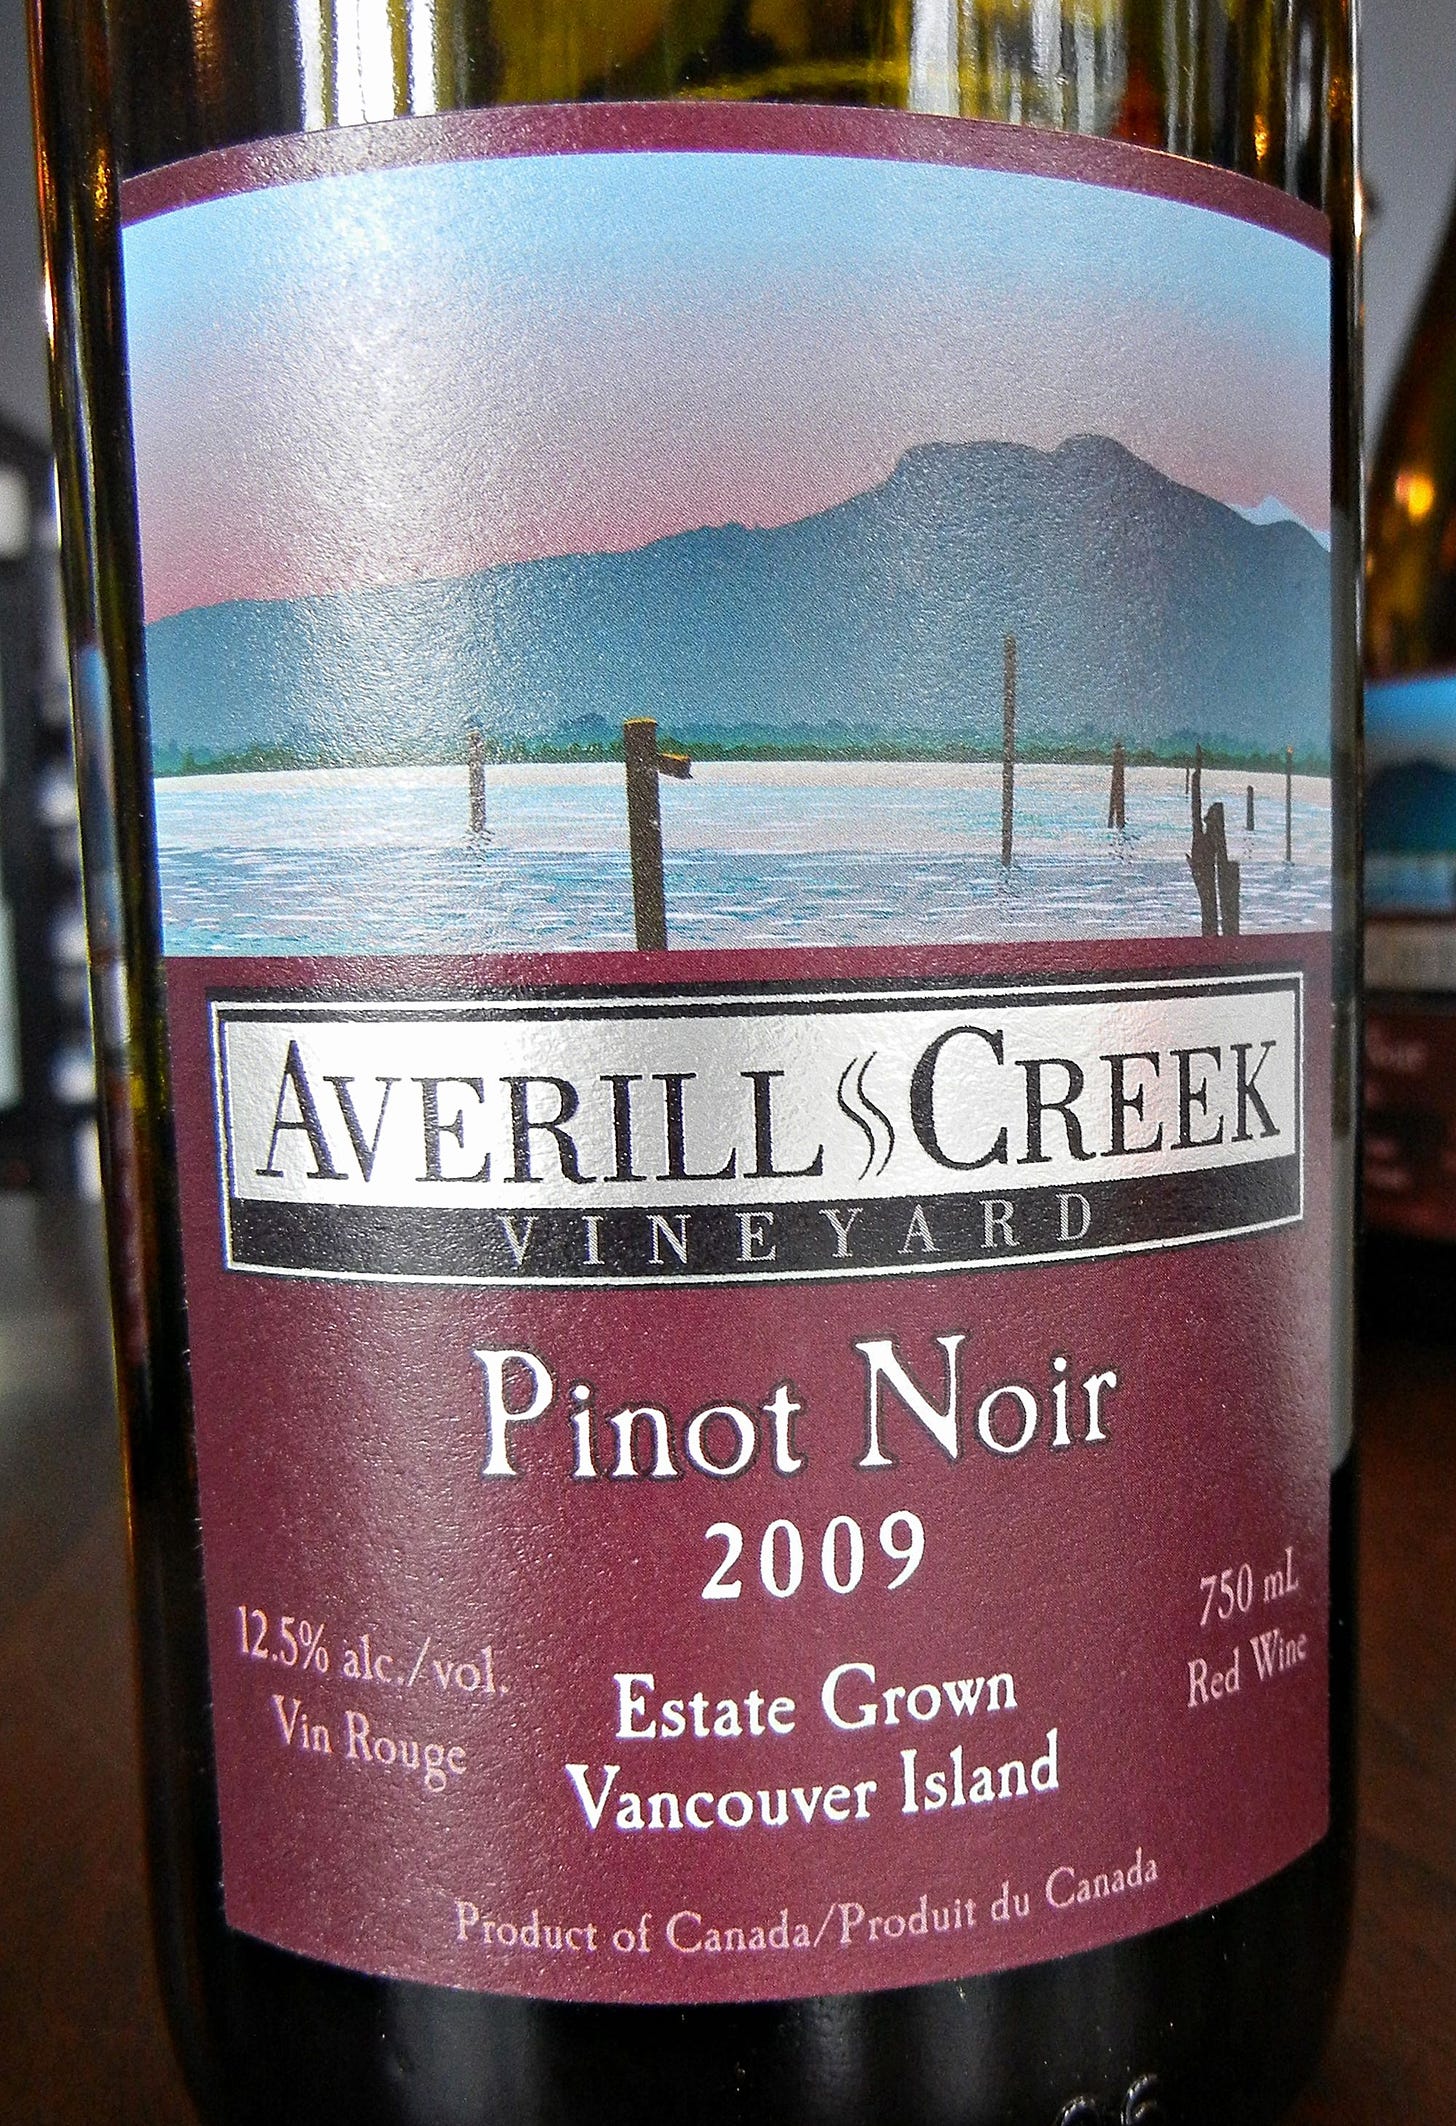 Averill Creek Pinot Noir 2009 Label - BC Pinot Noir Tasting Review 24 